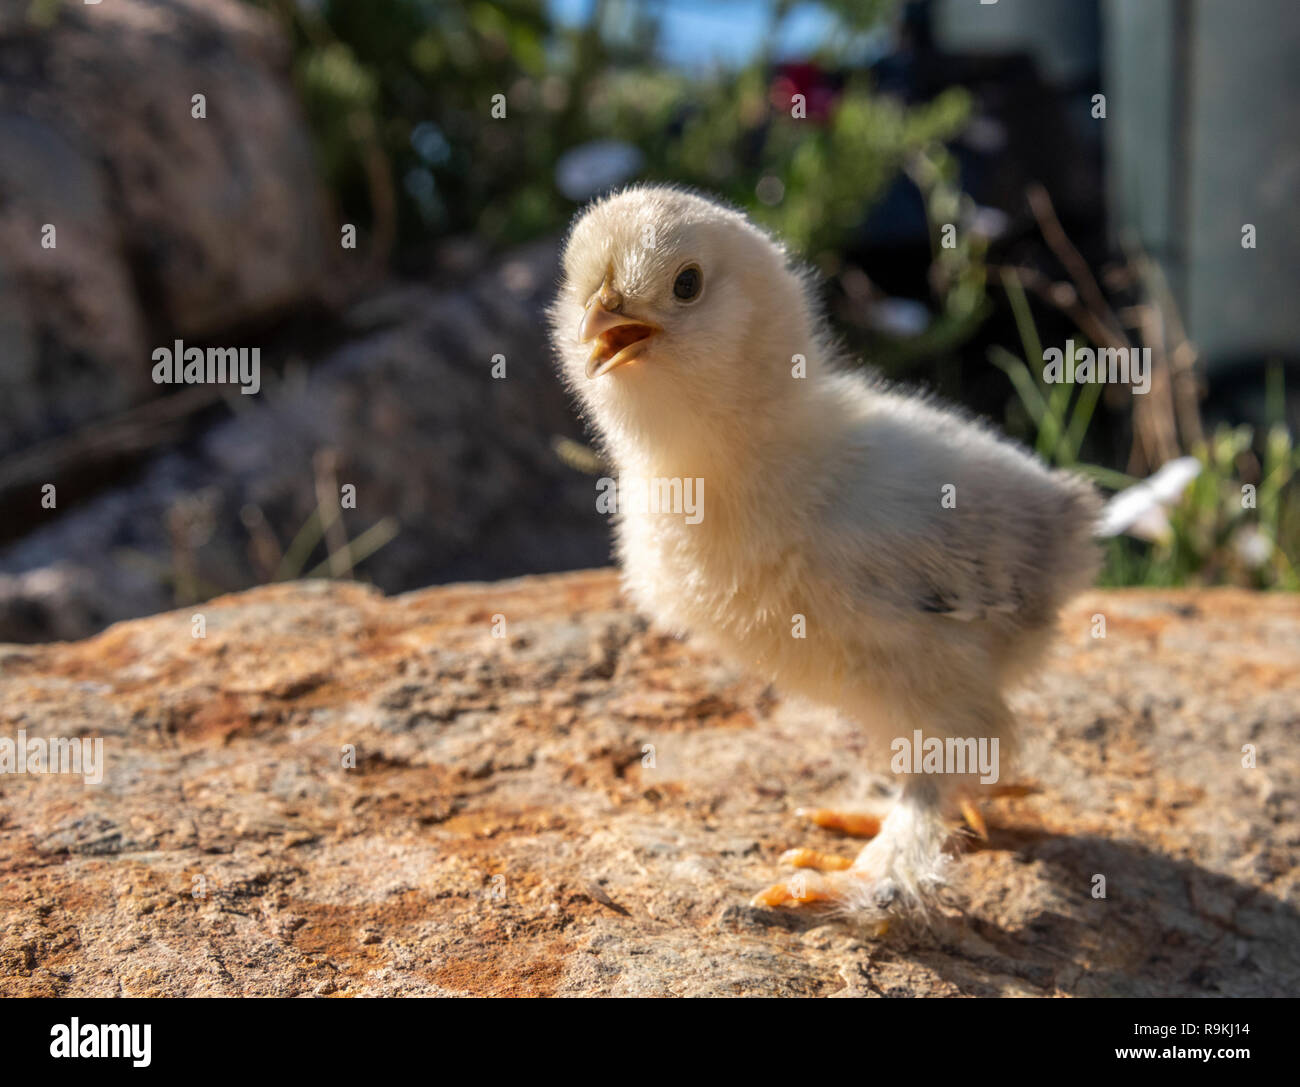 Baby chick in yard vegetation Stock Photo